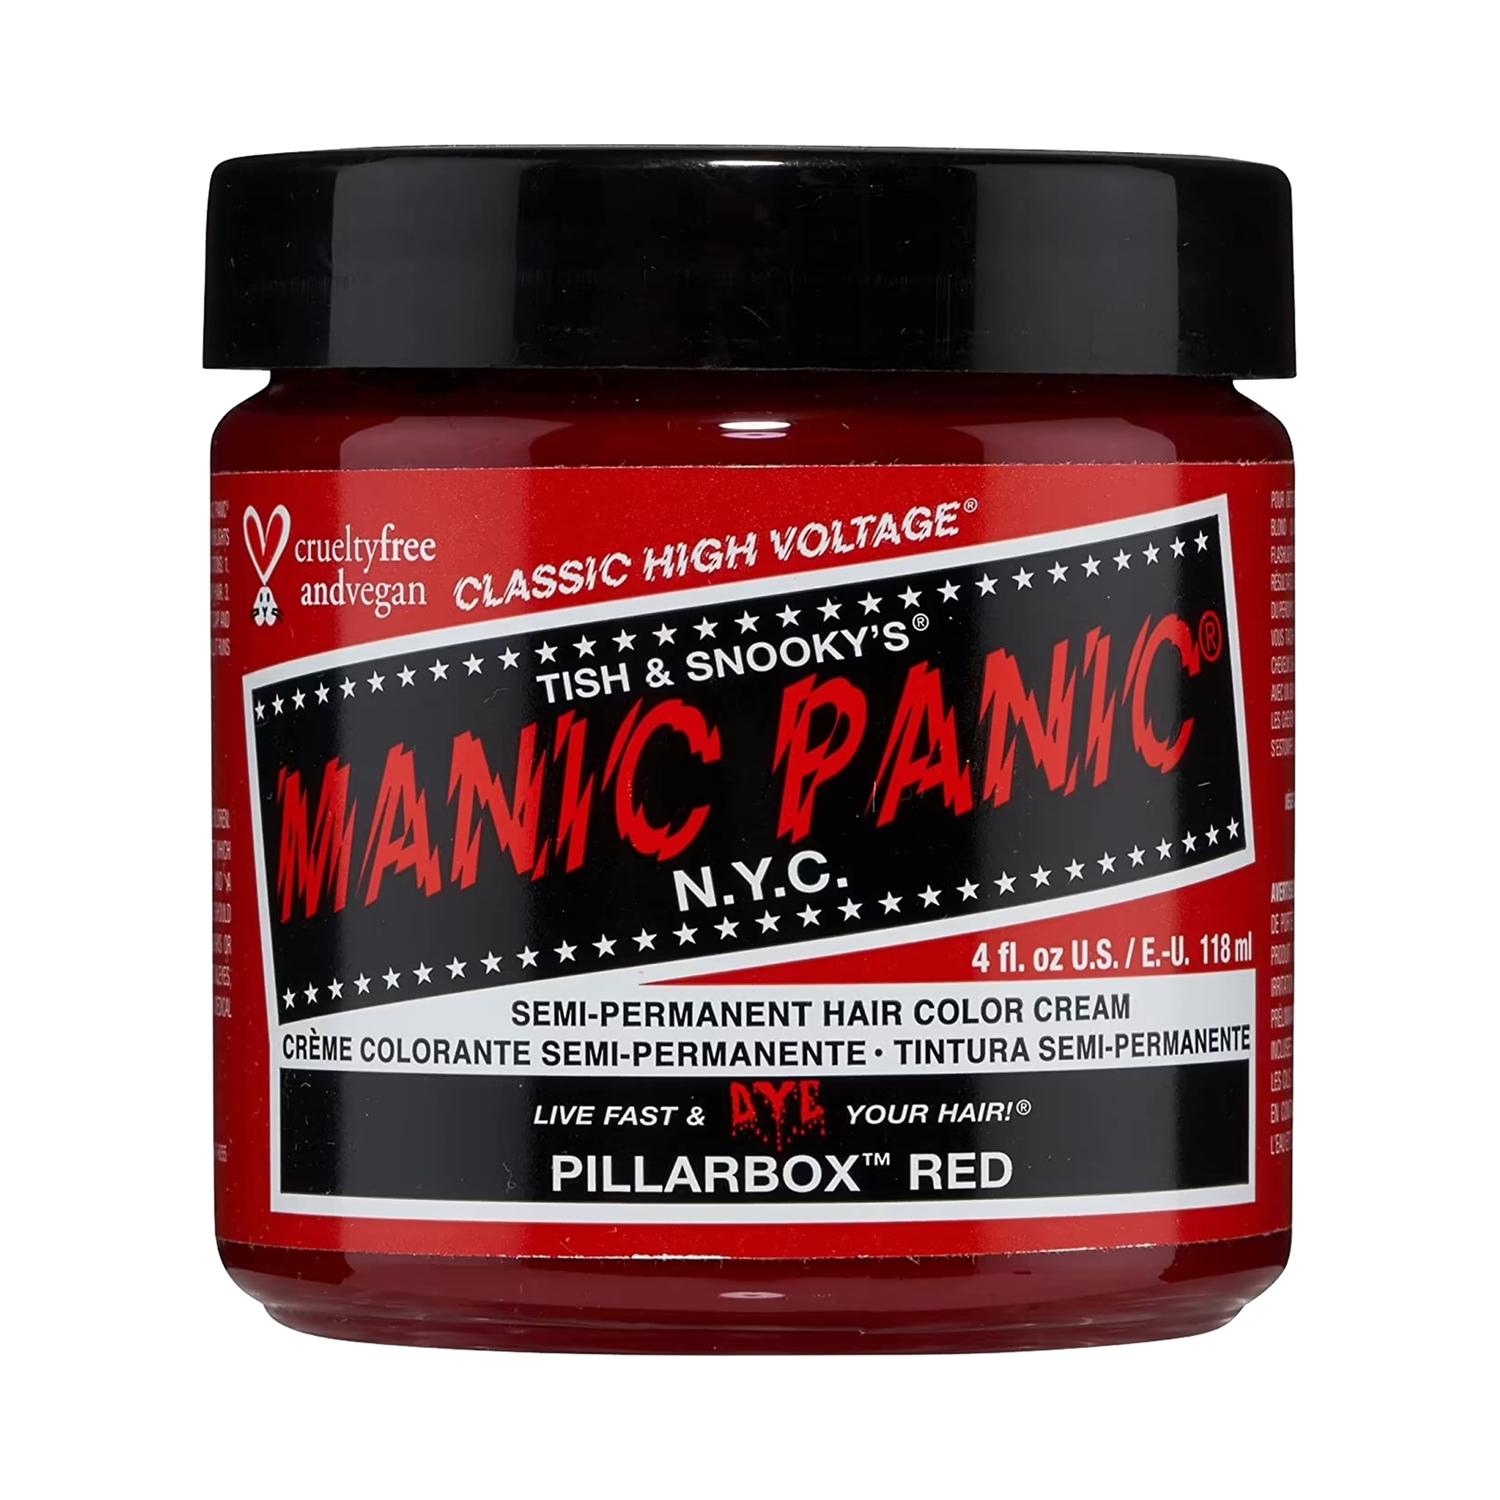 manic panic classic high voltage semi permanent hair color cream - pillarbox red (118ml)